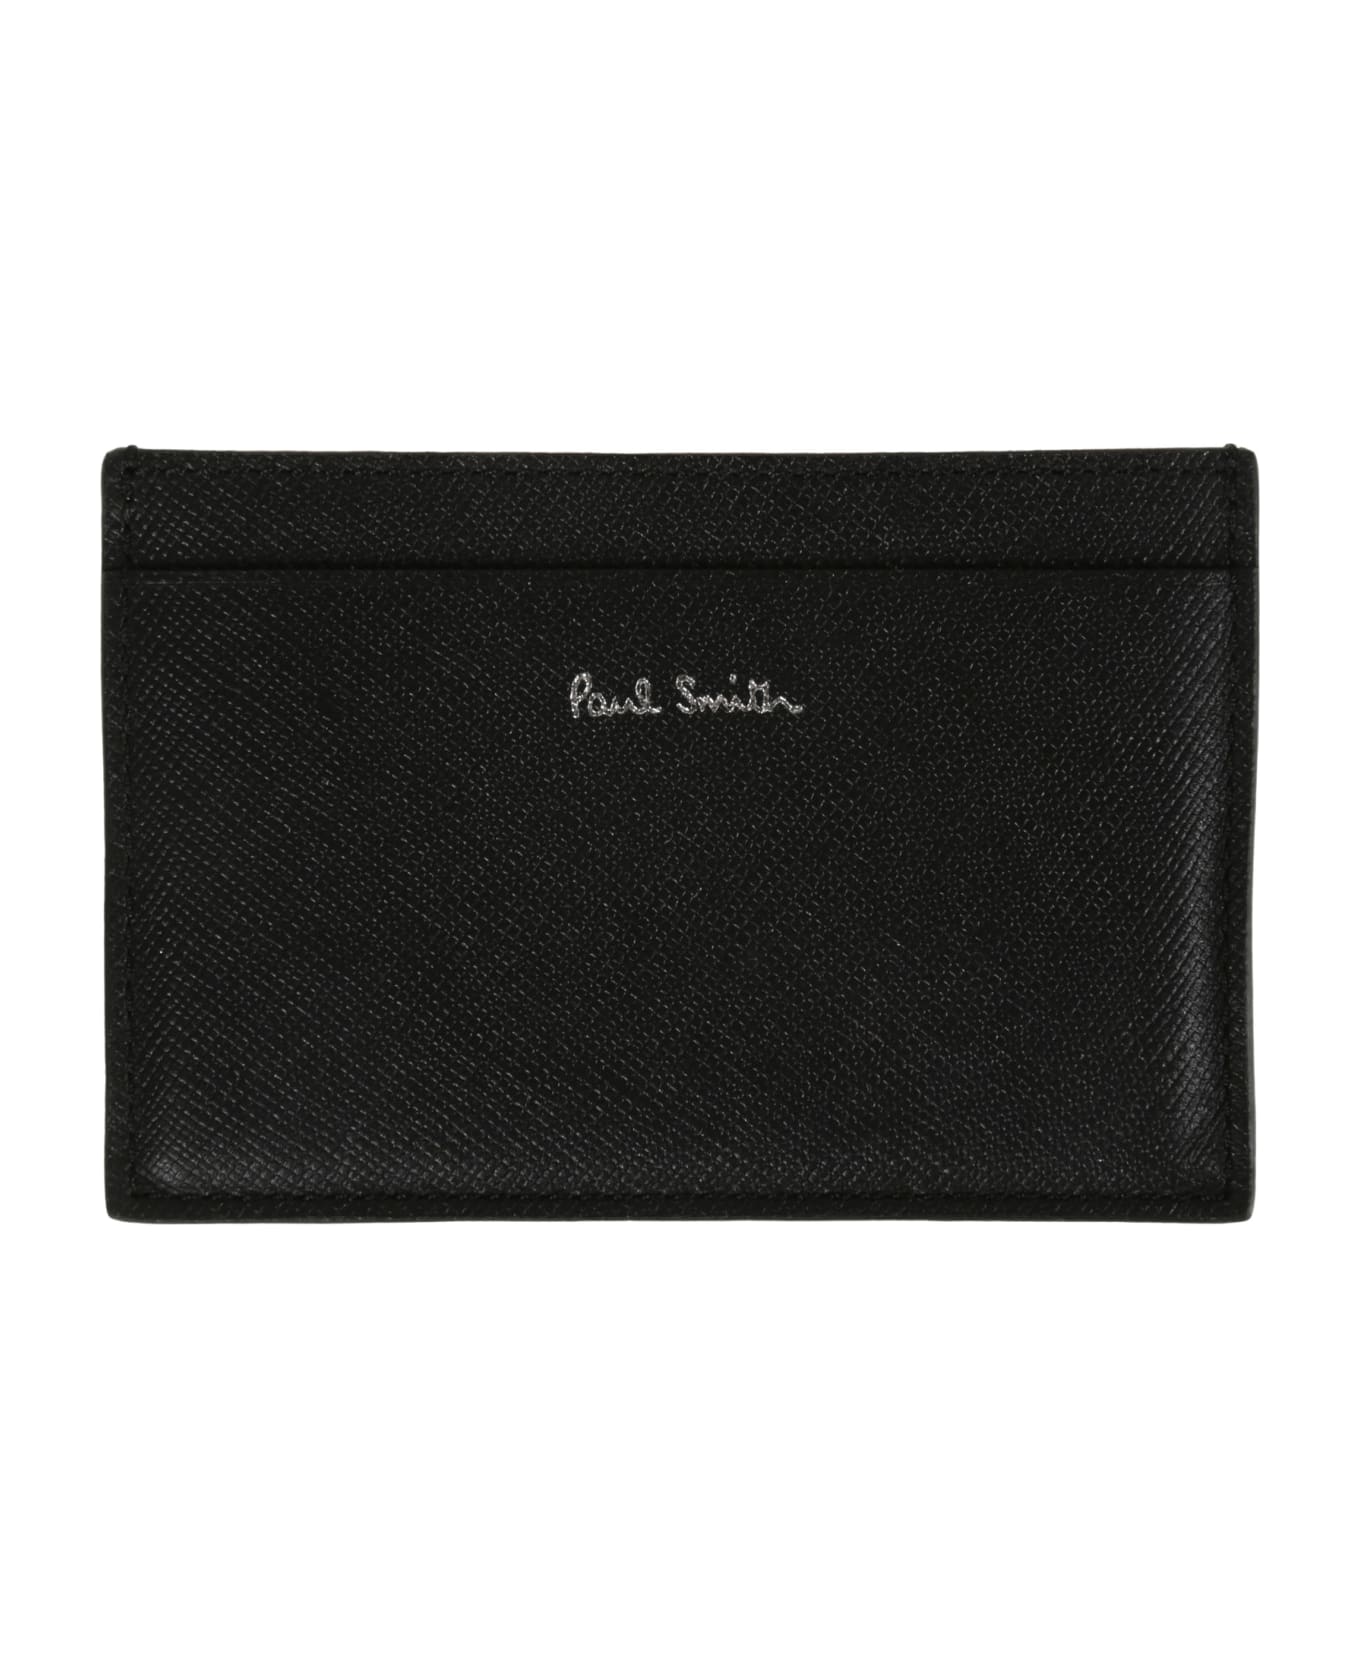 Paul Smith Wallet Cc Case Mini - Black 財布